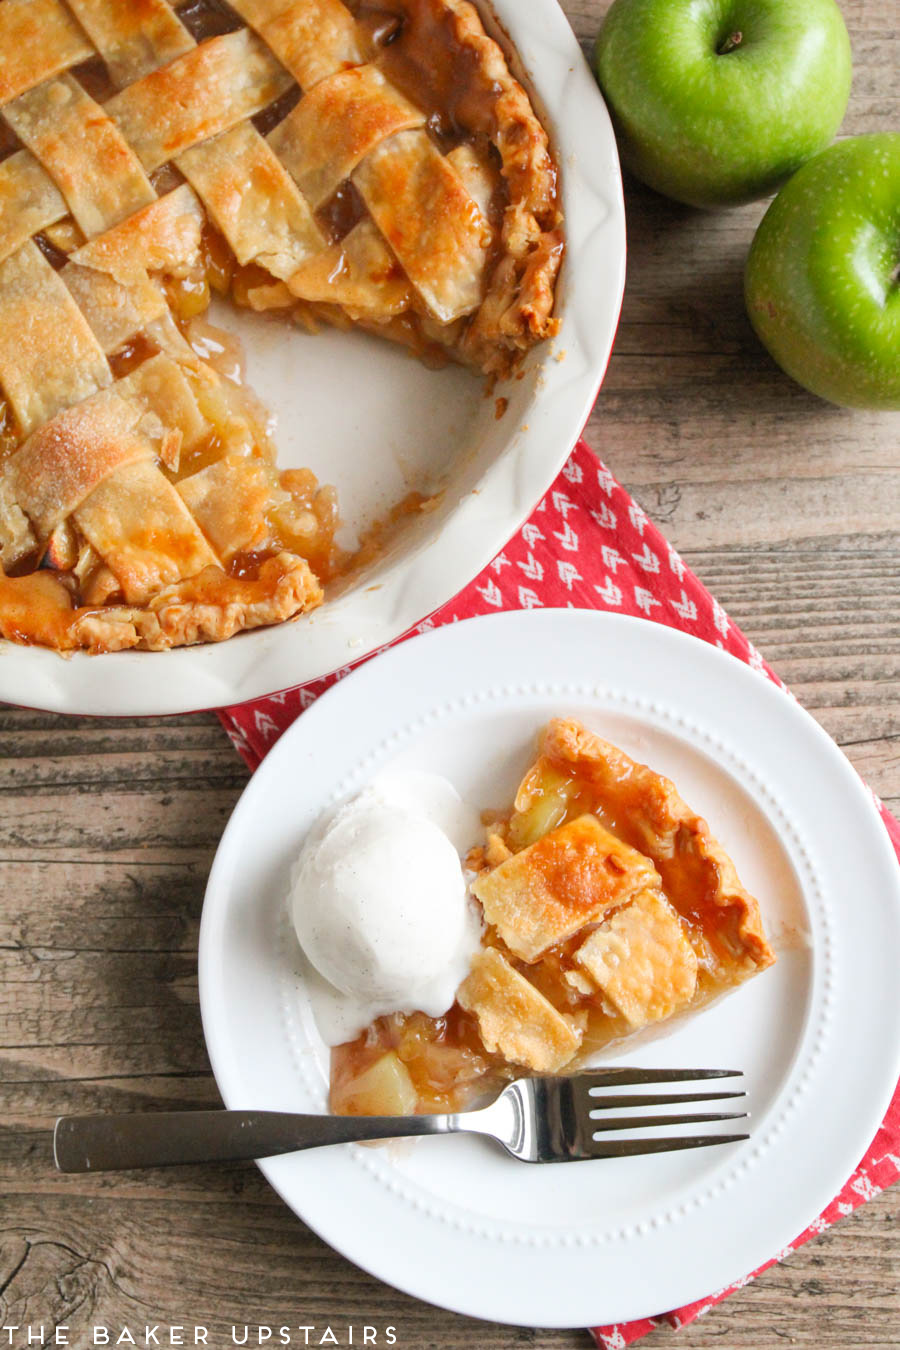 9 delicious pie recipes - from adorable berry hand pies to luscious lemon meringue pie, plus a killer homemade pie crust recipe!